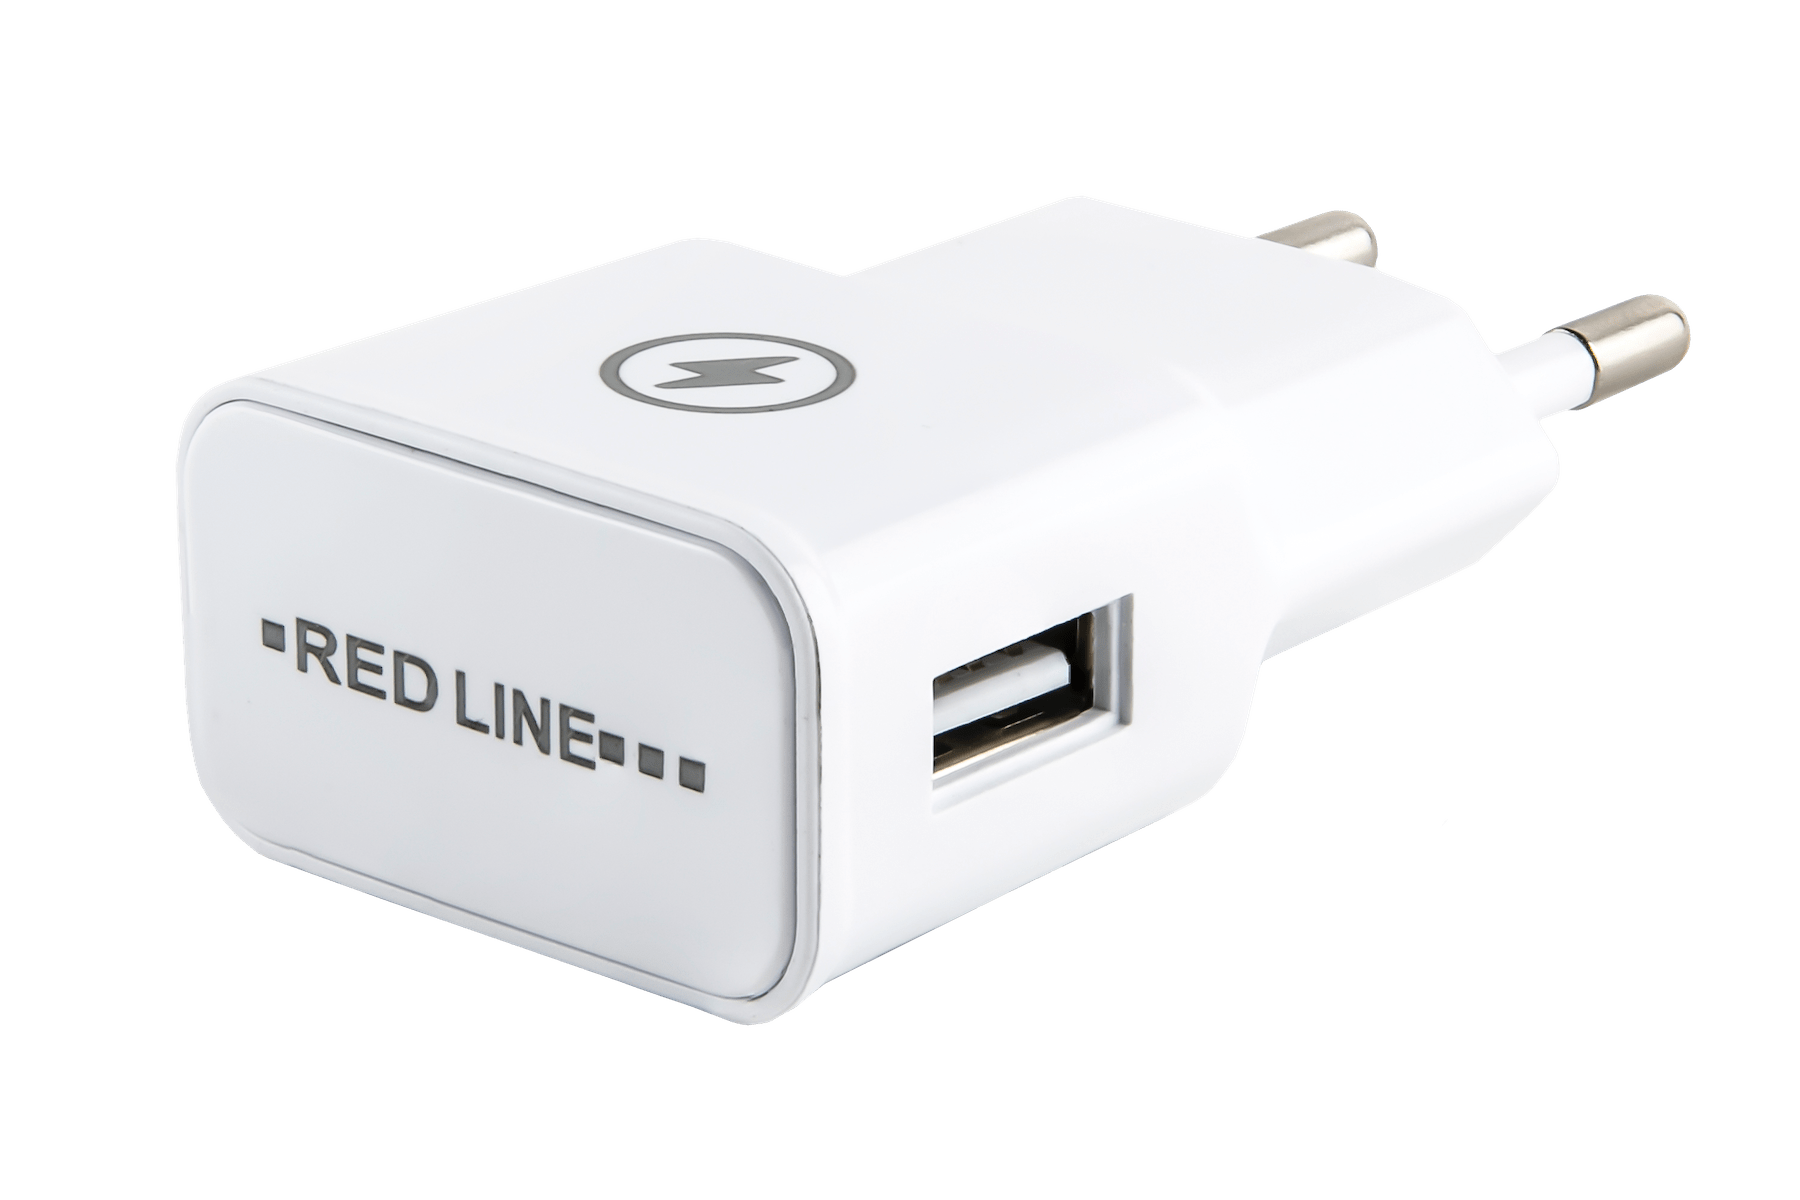 СЗУ Red Line 1 USB (модель NT-1A), 1A, + кабель 8pin для Apple